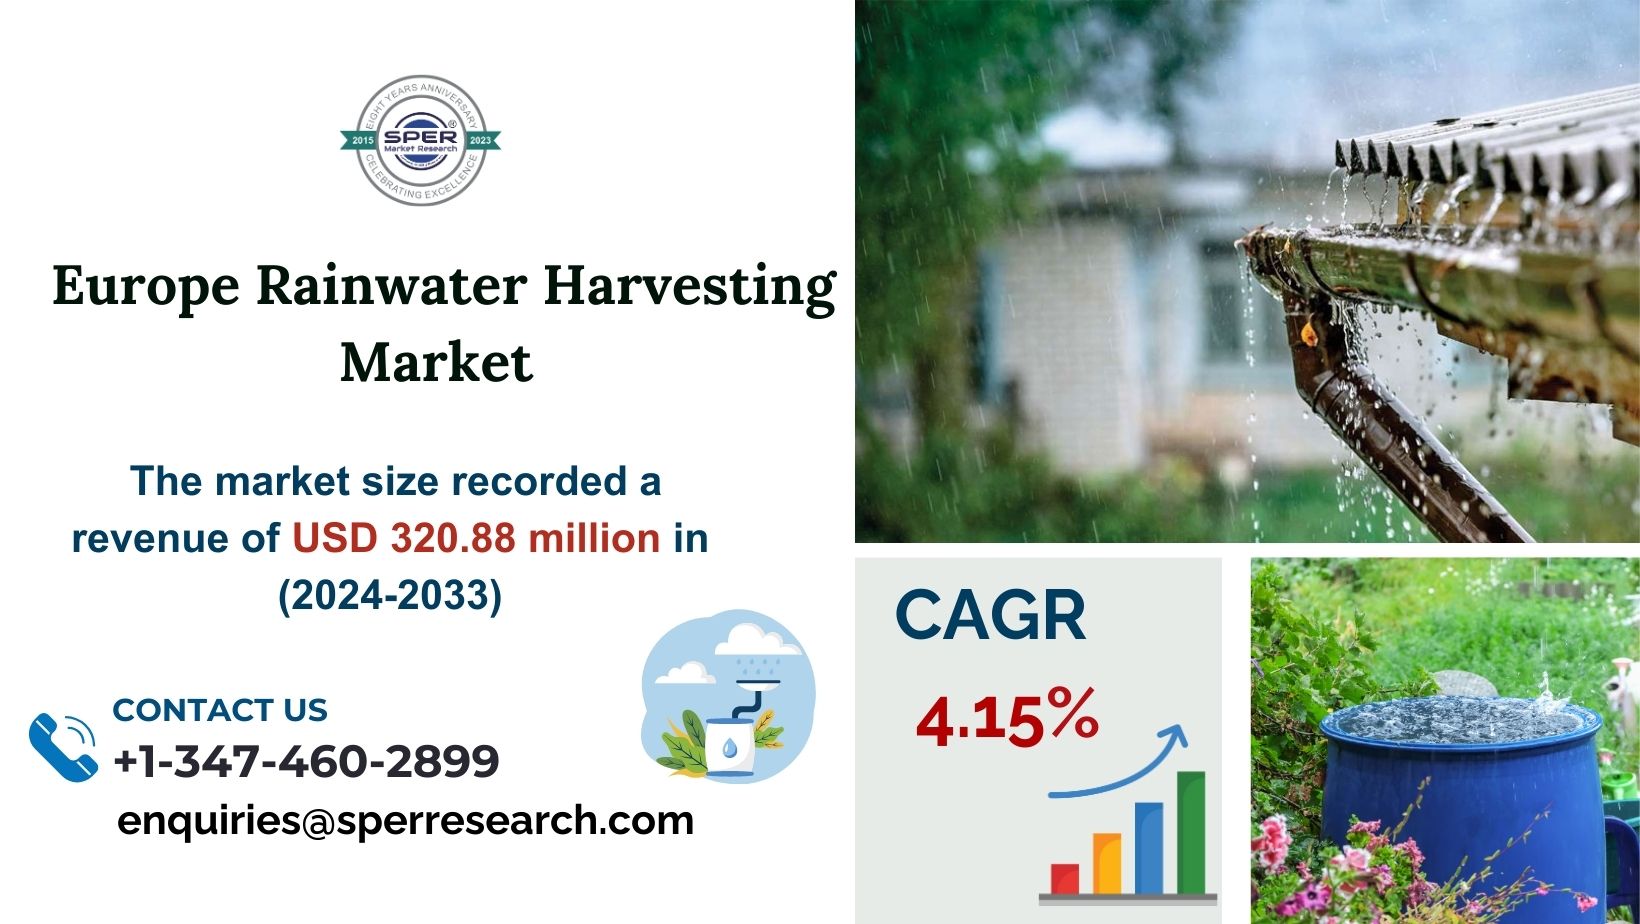 Europe Rainwater Harvesting Market Growth 2033